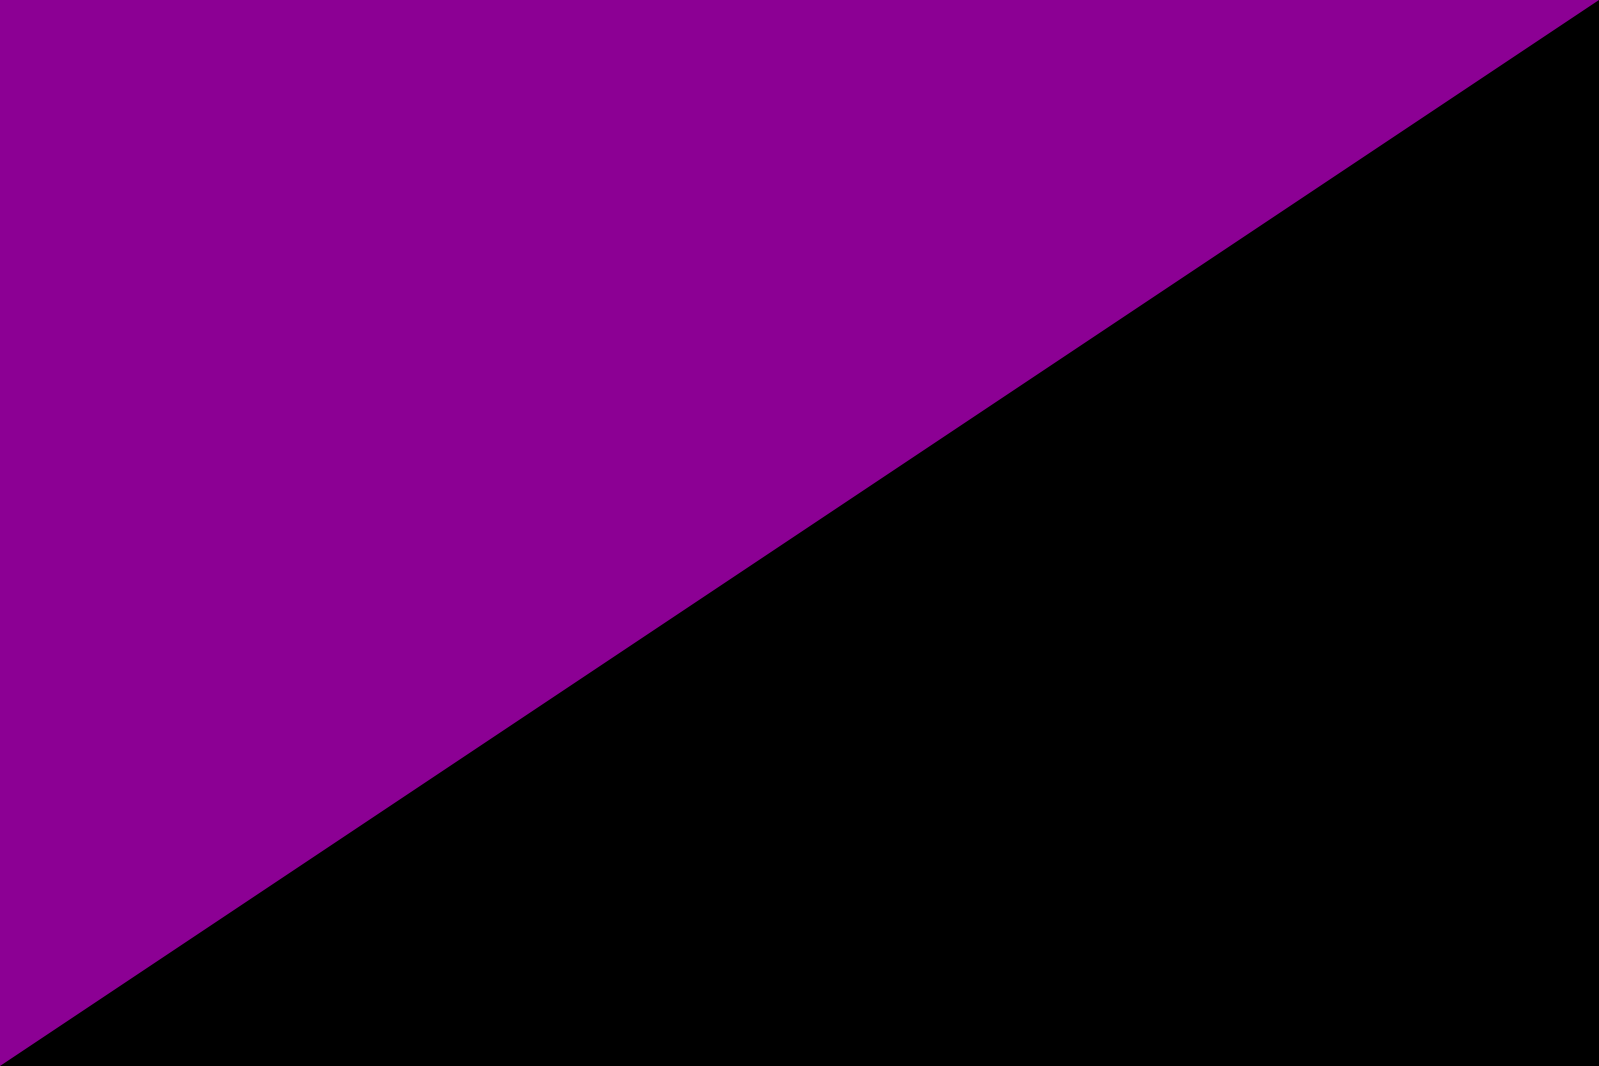 Картинки с двумя цветами. Флаг анархо феминисток. Анархо феминизм флаг. Анархо флаги. Черно фиолетовый.